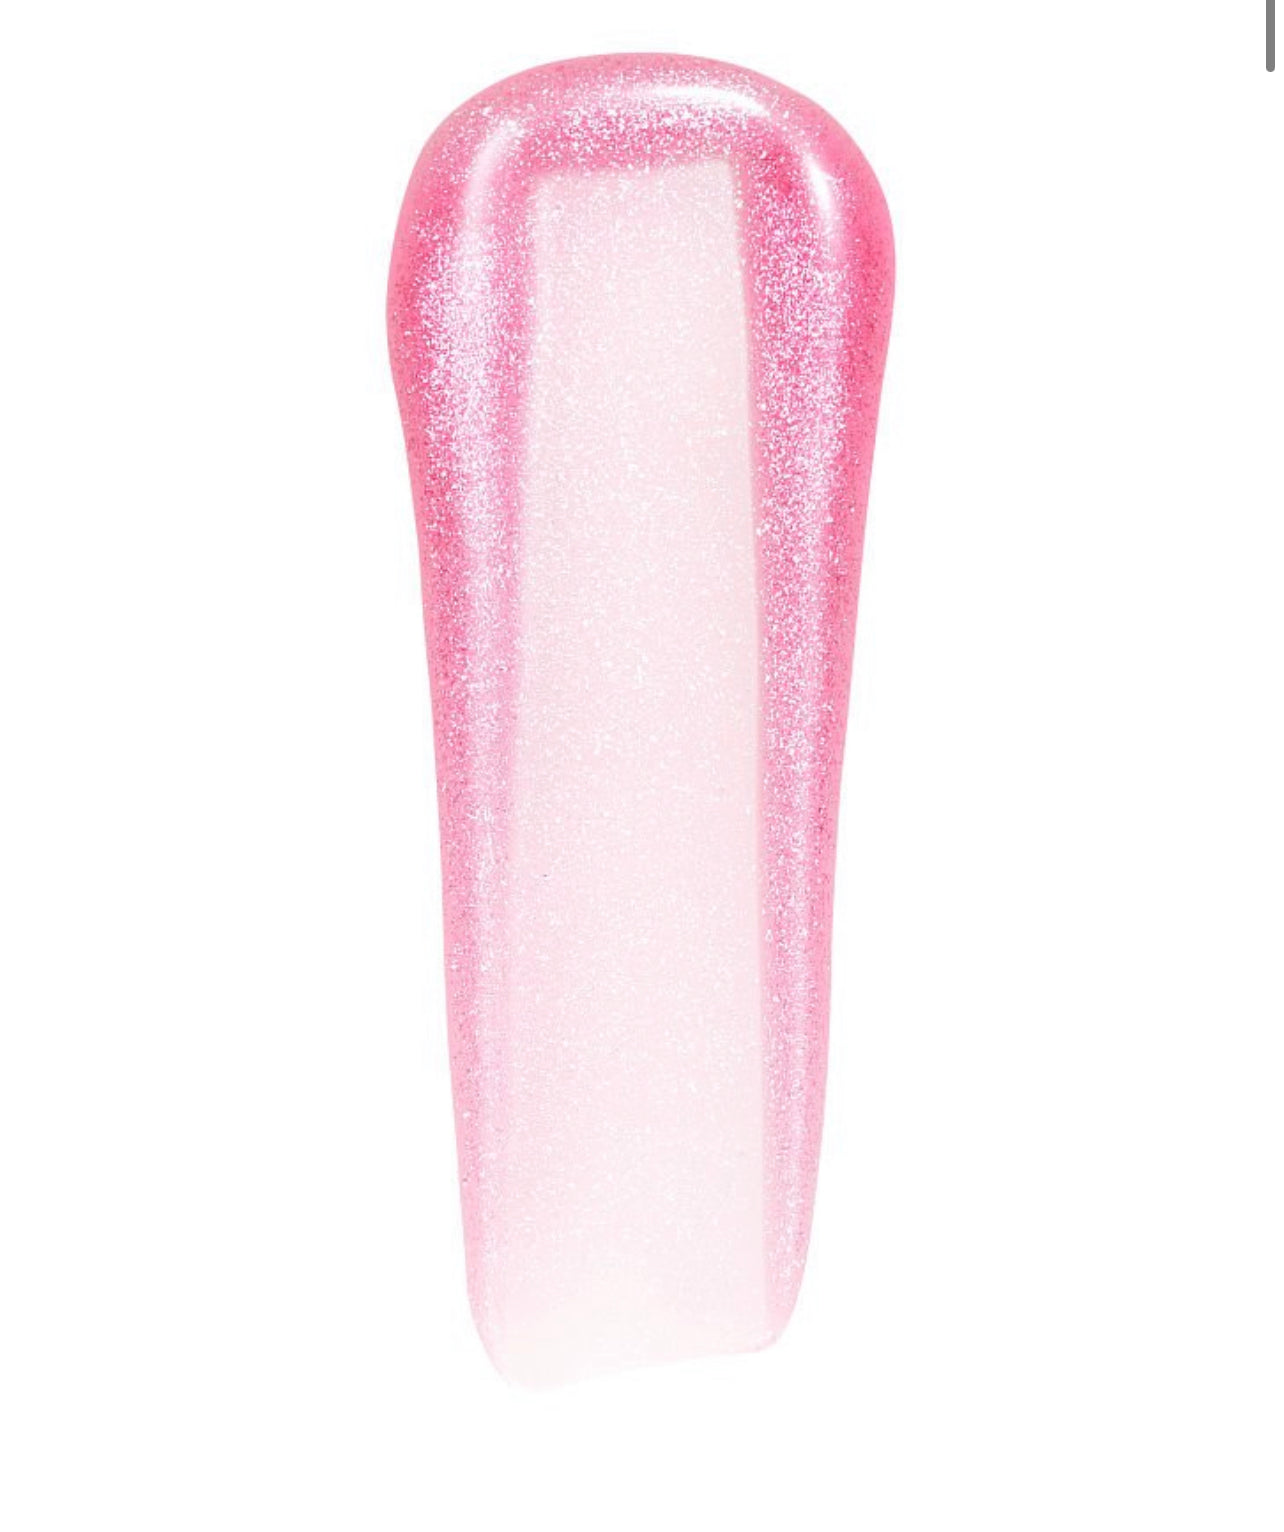 "Victoria’s Secret" Pink Mimosa Flavor Lip Gloss